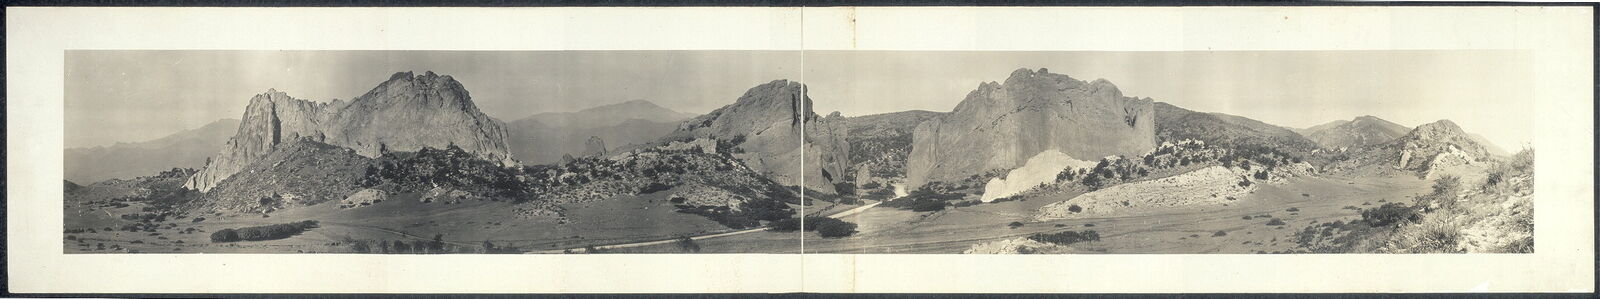 Photo:1912 Panoramic: Garden of the Gods Colorado Springs